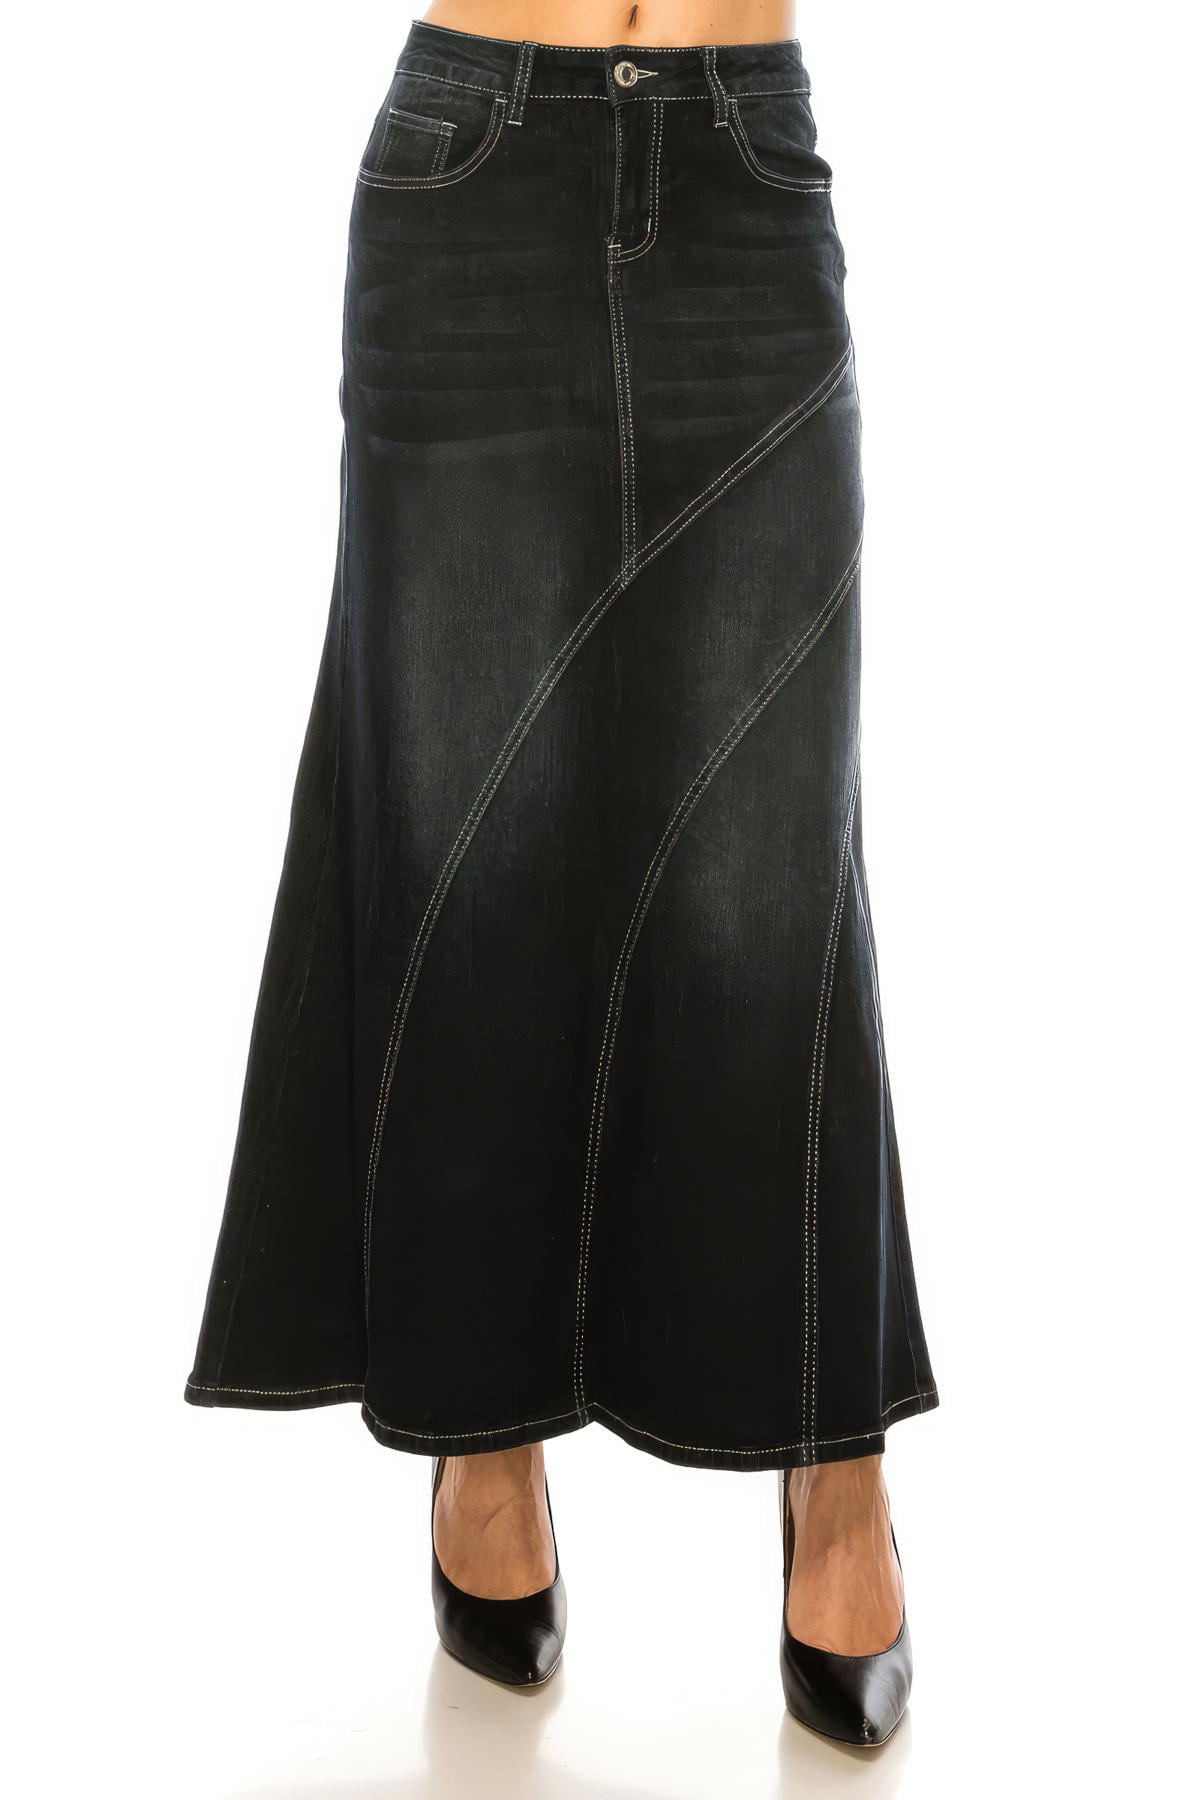 Fashion2Love Women's Juniors/Plus Size Stretch Denim Long A-Line Skirt ...